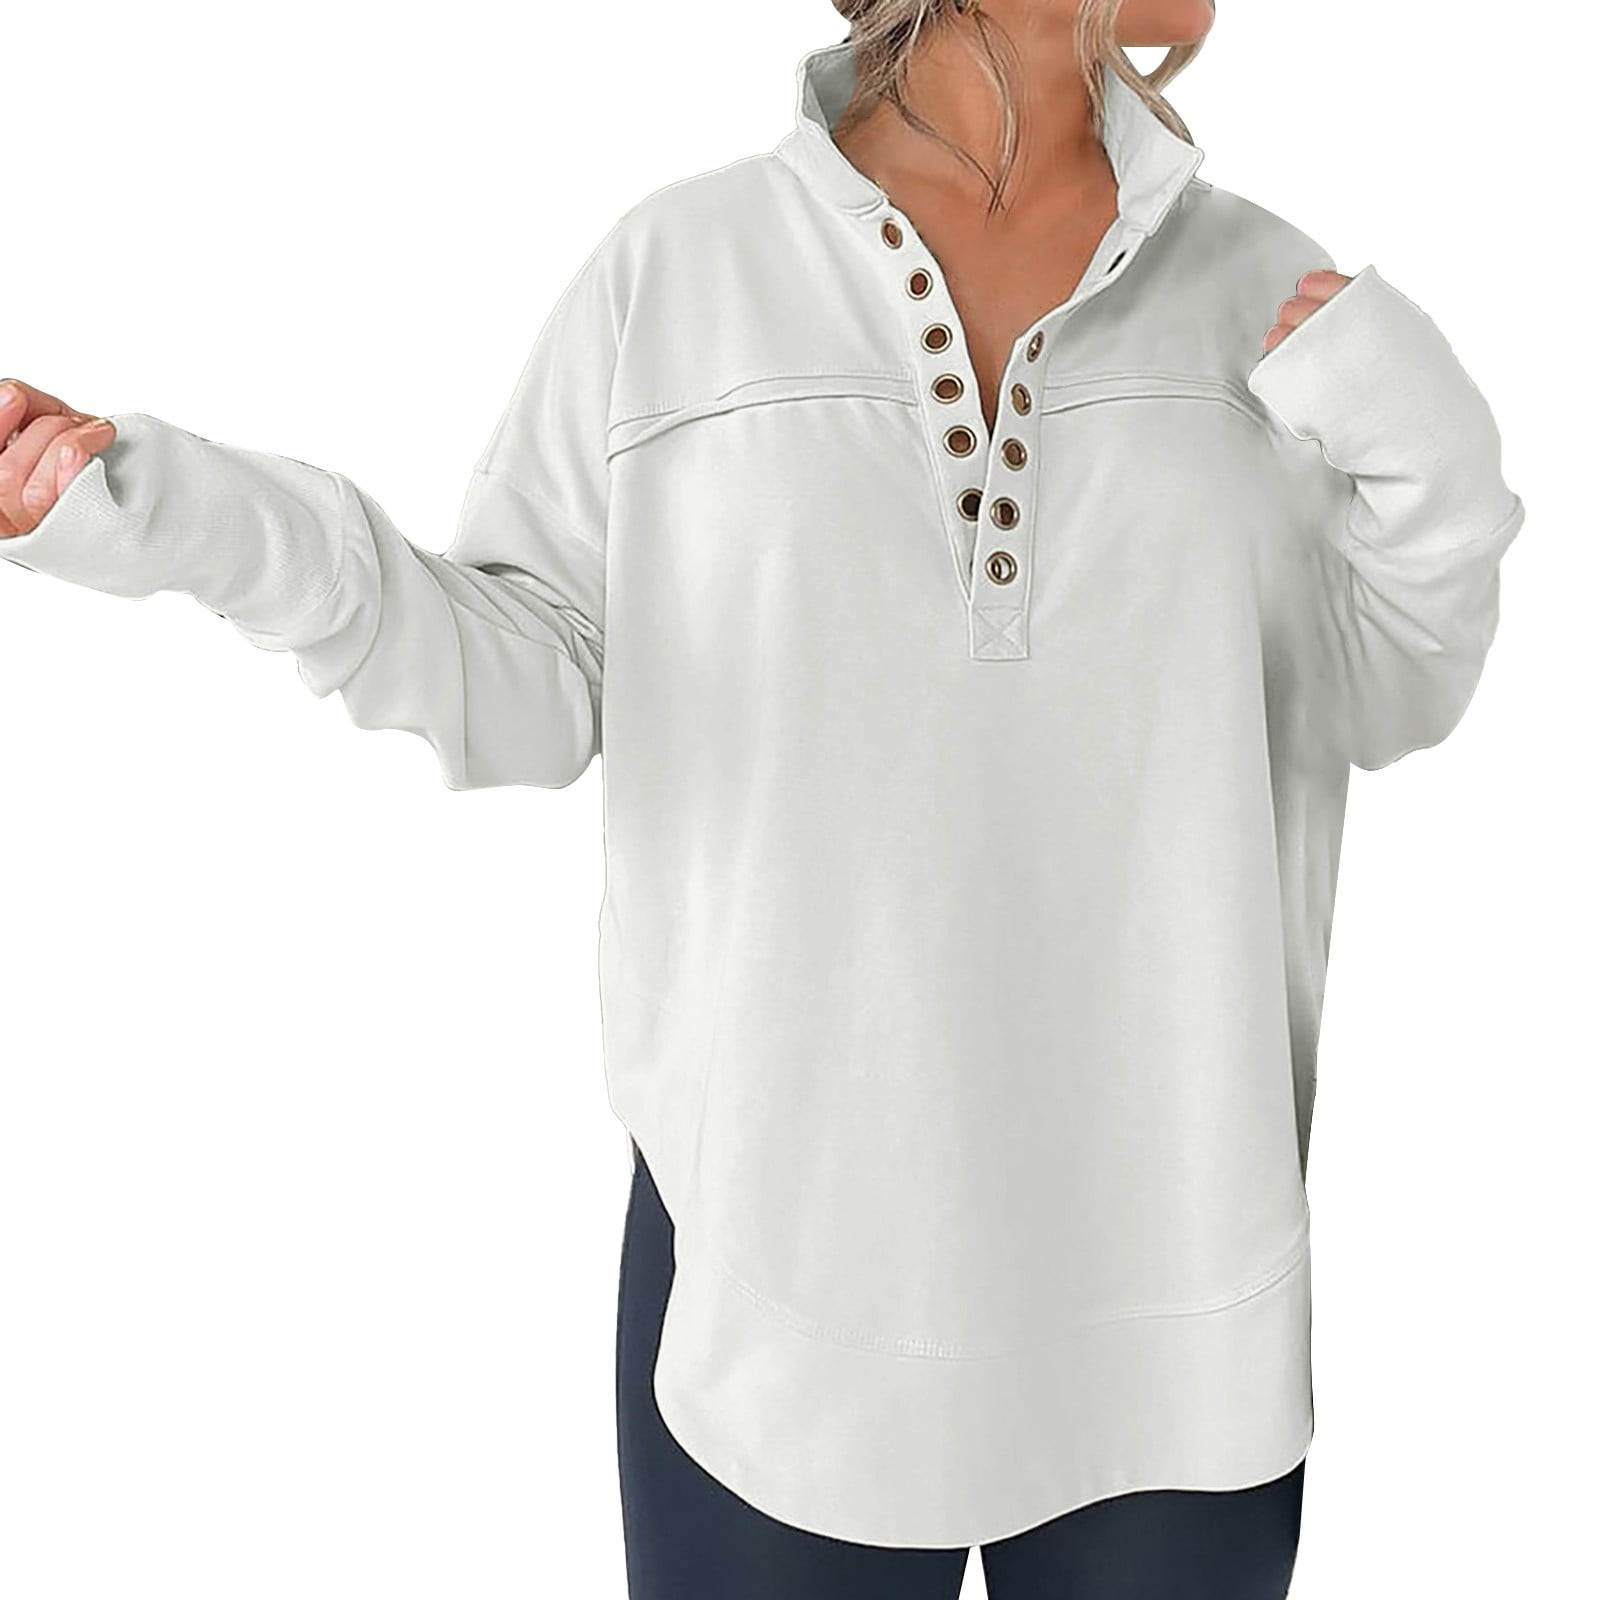 Tiqkatyck Plus Size Tops for Women Clearance, Half Neck Thumbhole Cuff  Pullover Sweatshirt Ladies' Casual Hoodie Sweatshirt for Women White Xl 